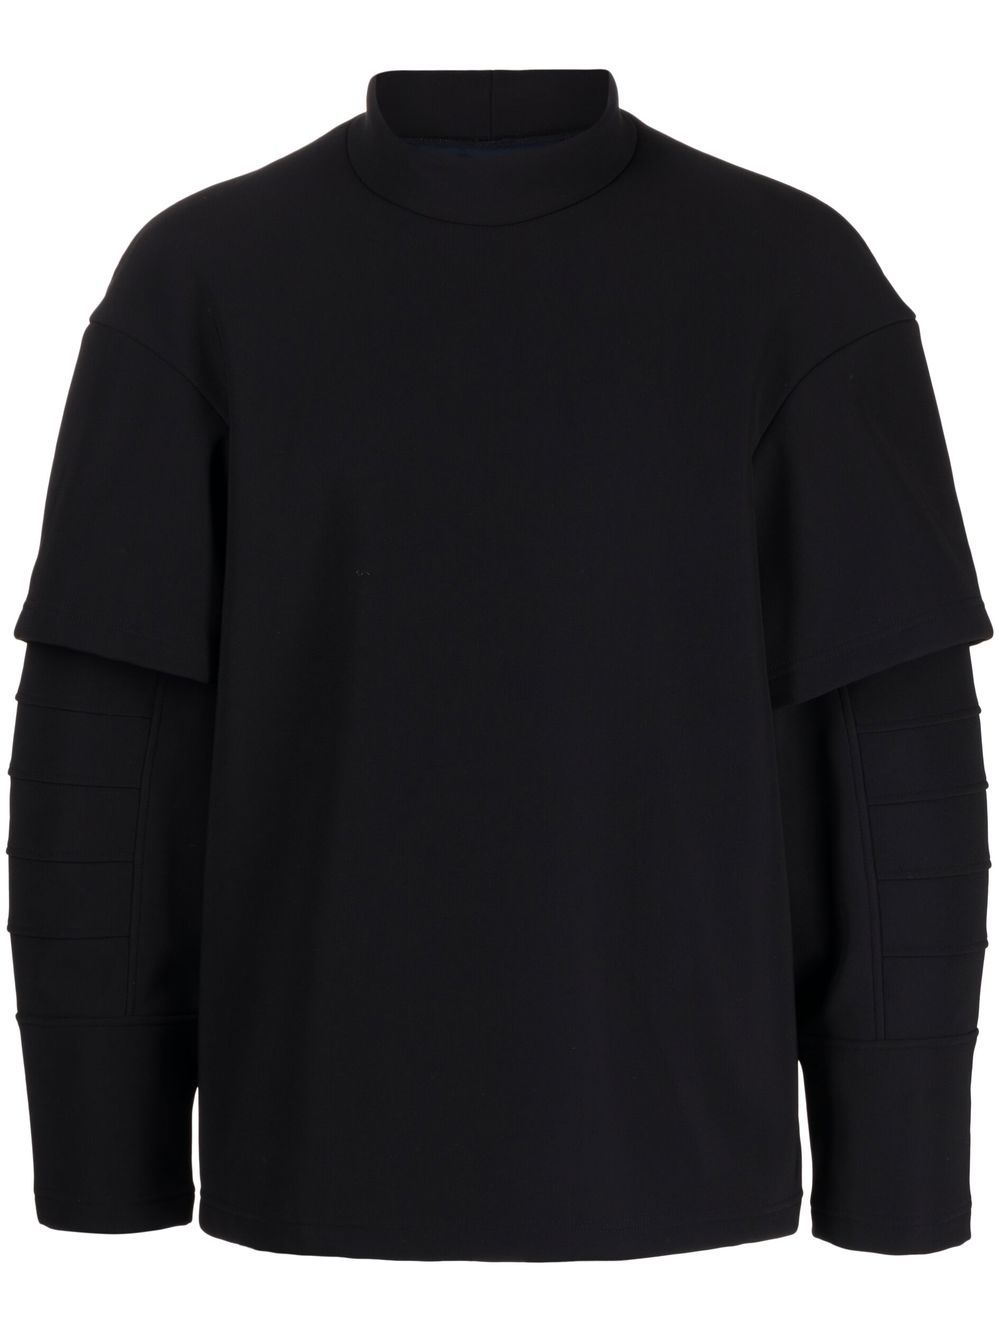 Anrealage layered stand-up collar sweatshirt - Black